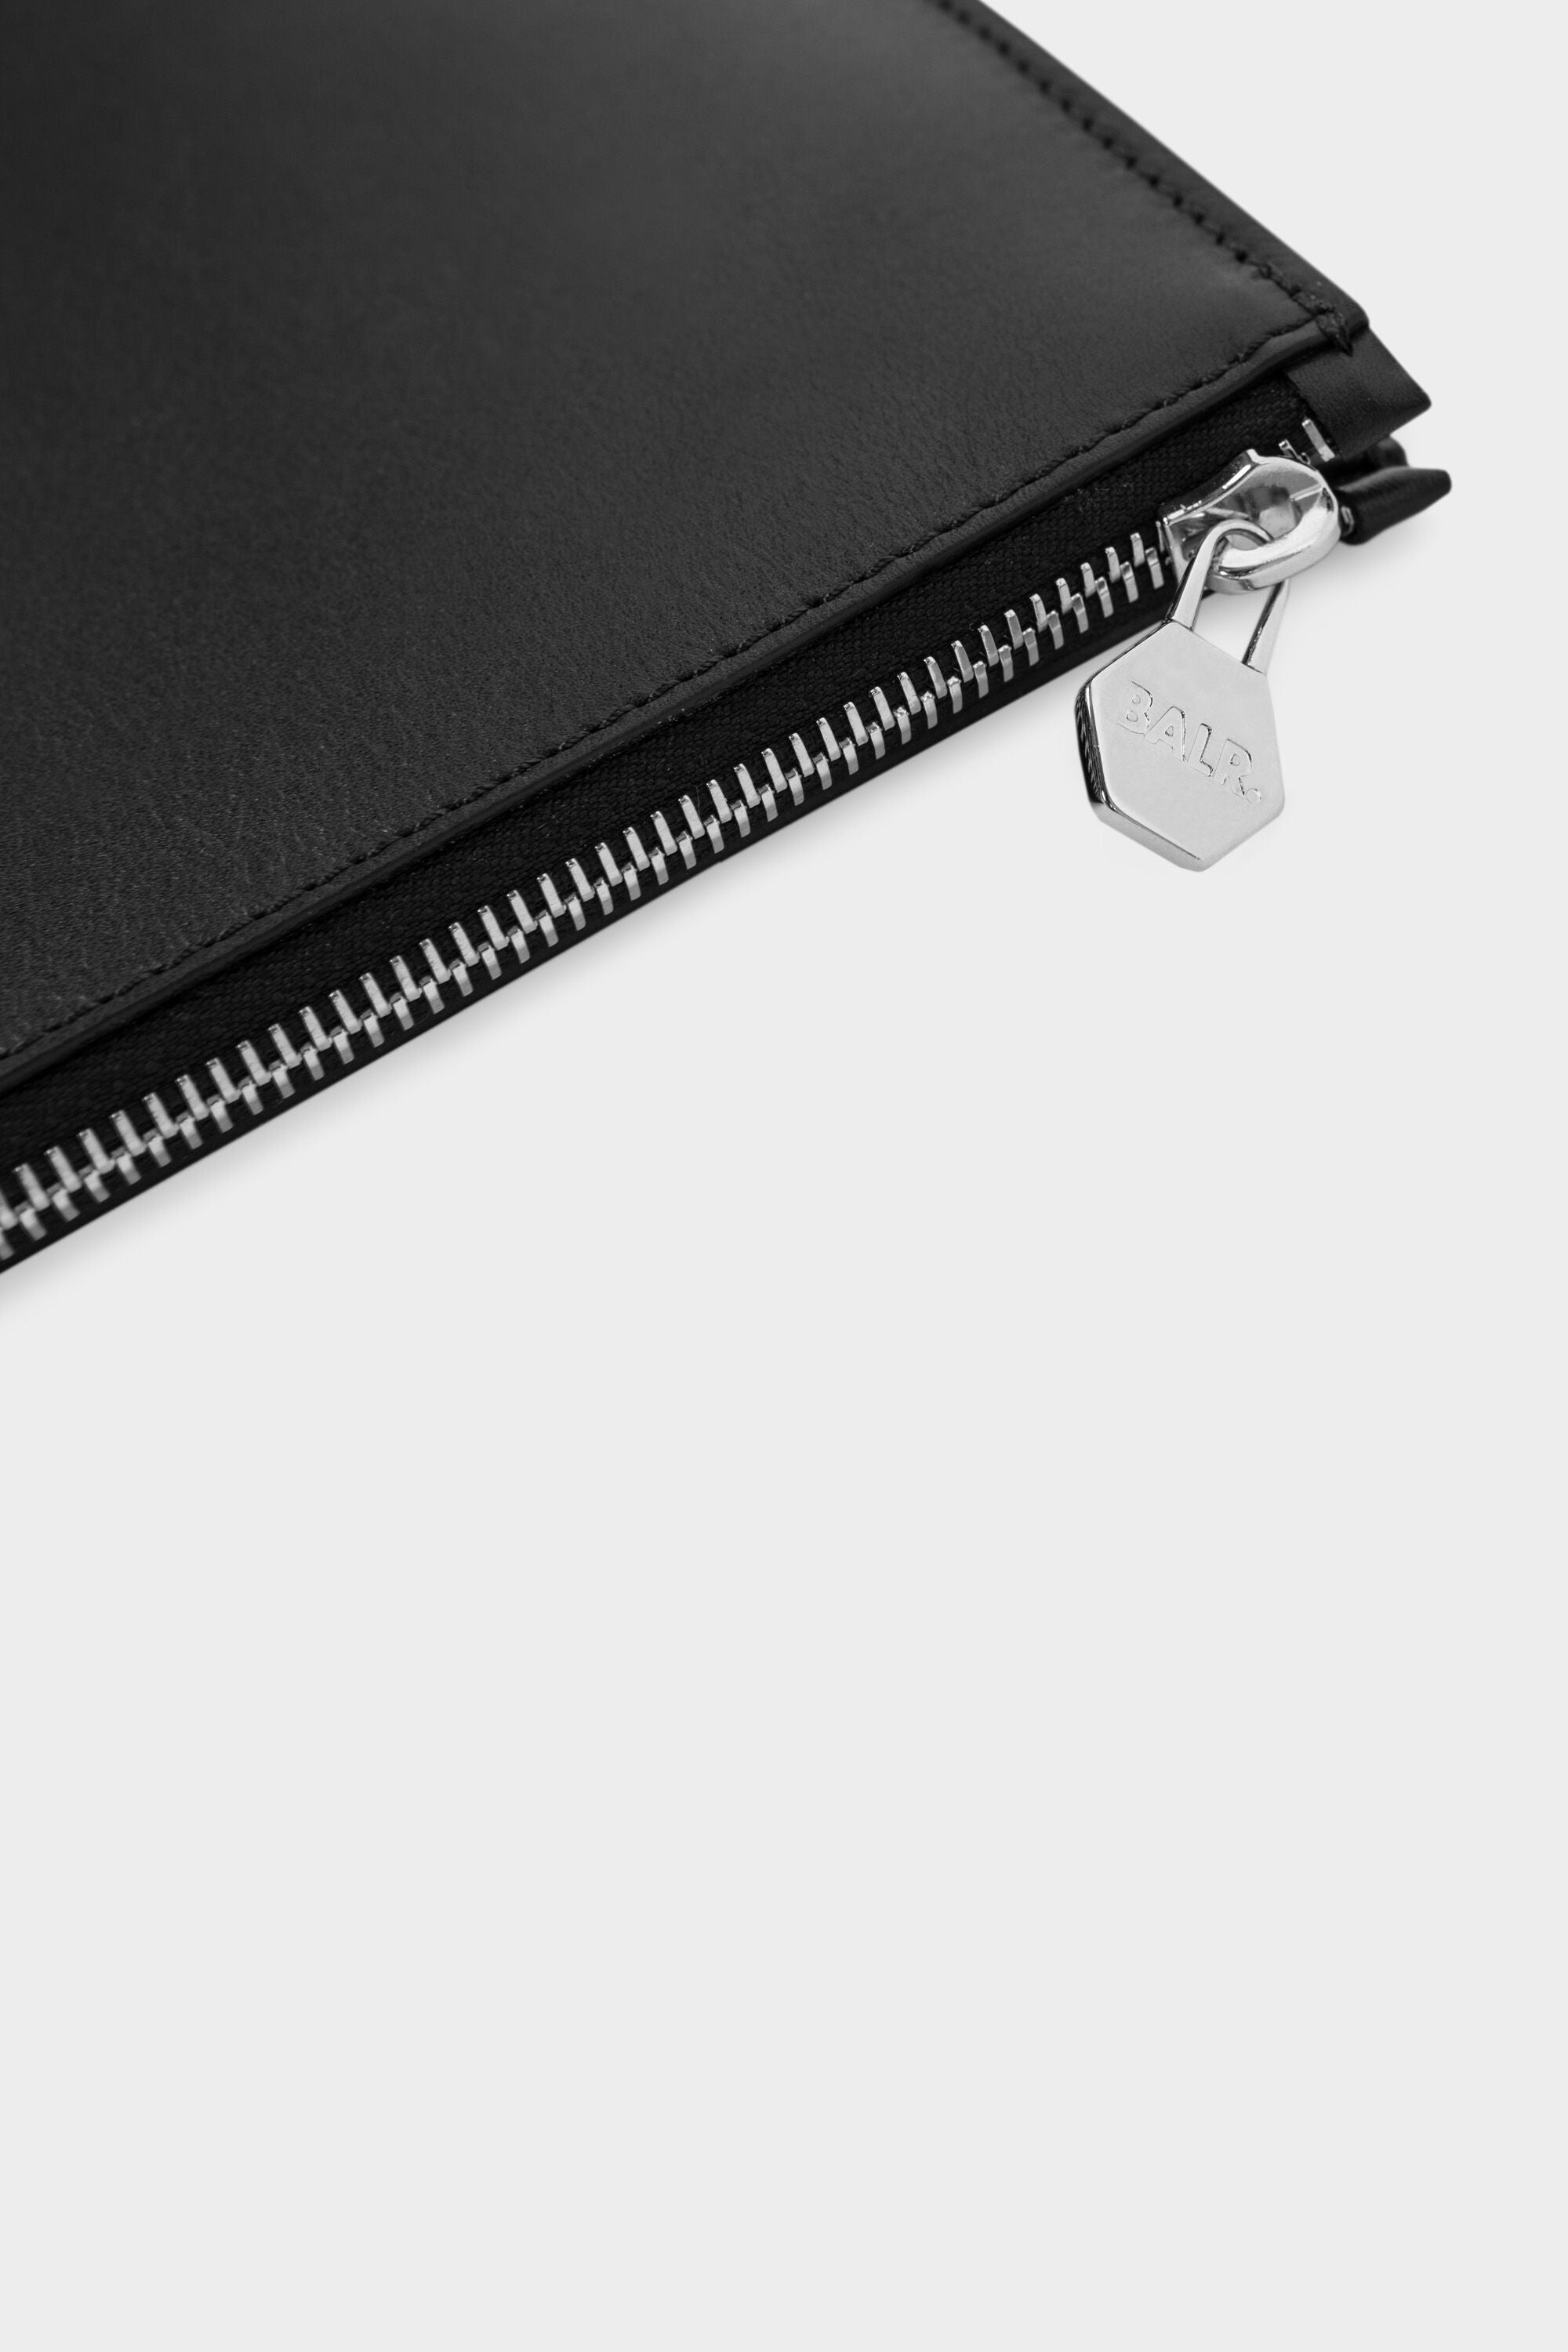 BT Leather Laptop Sleeve Black